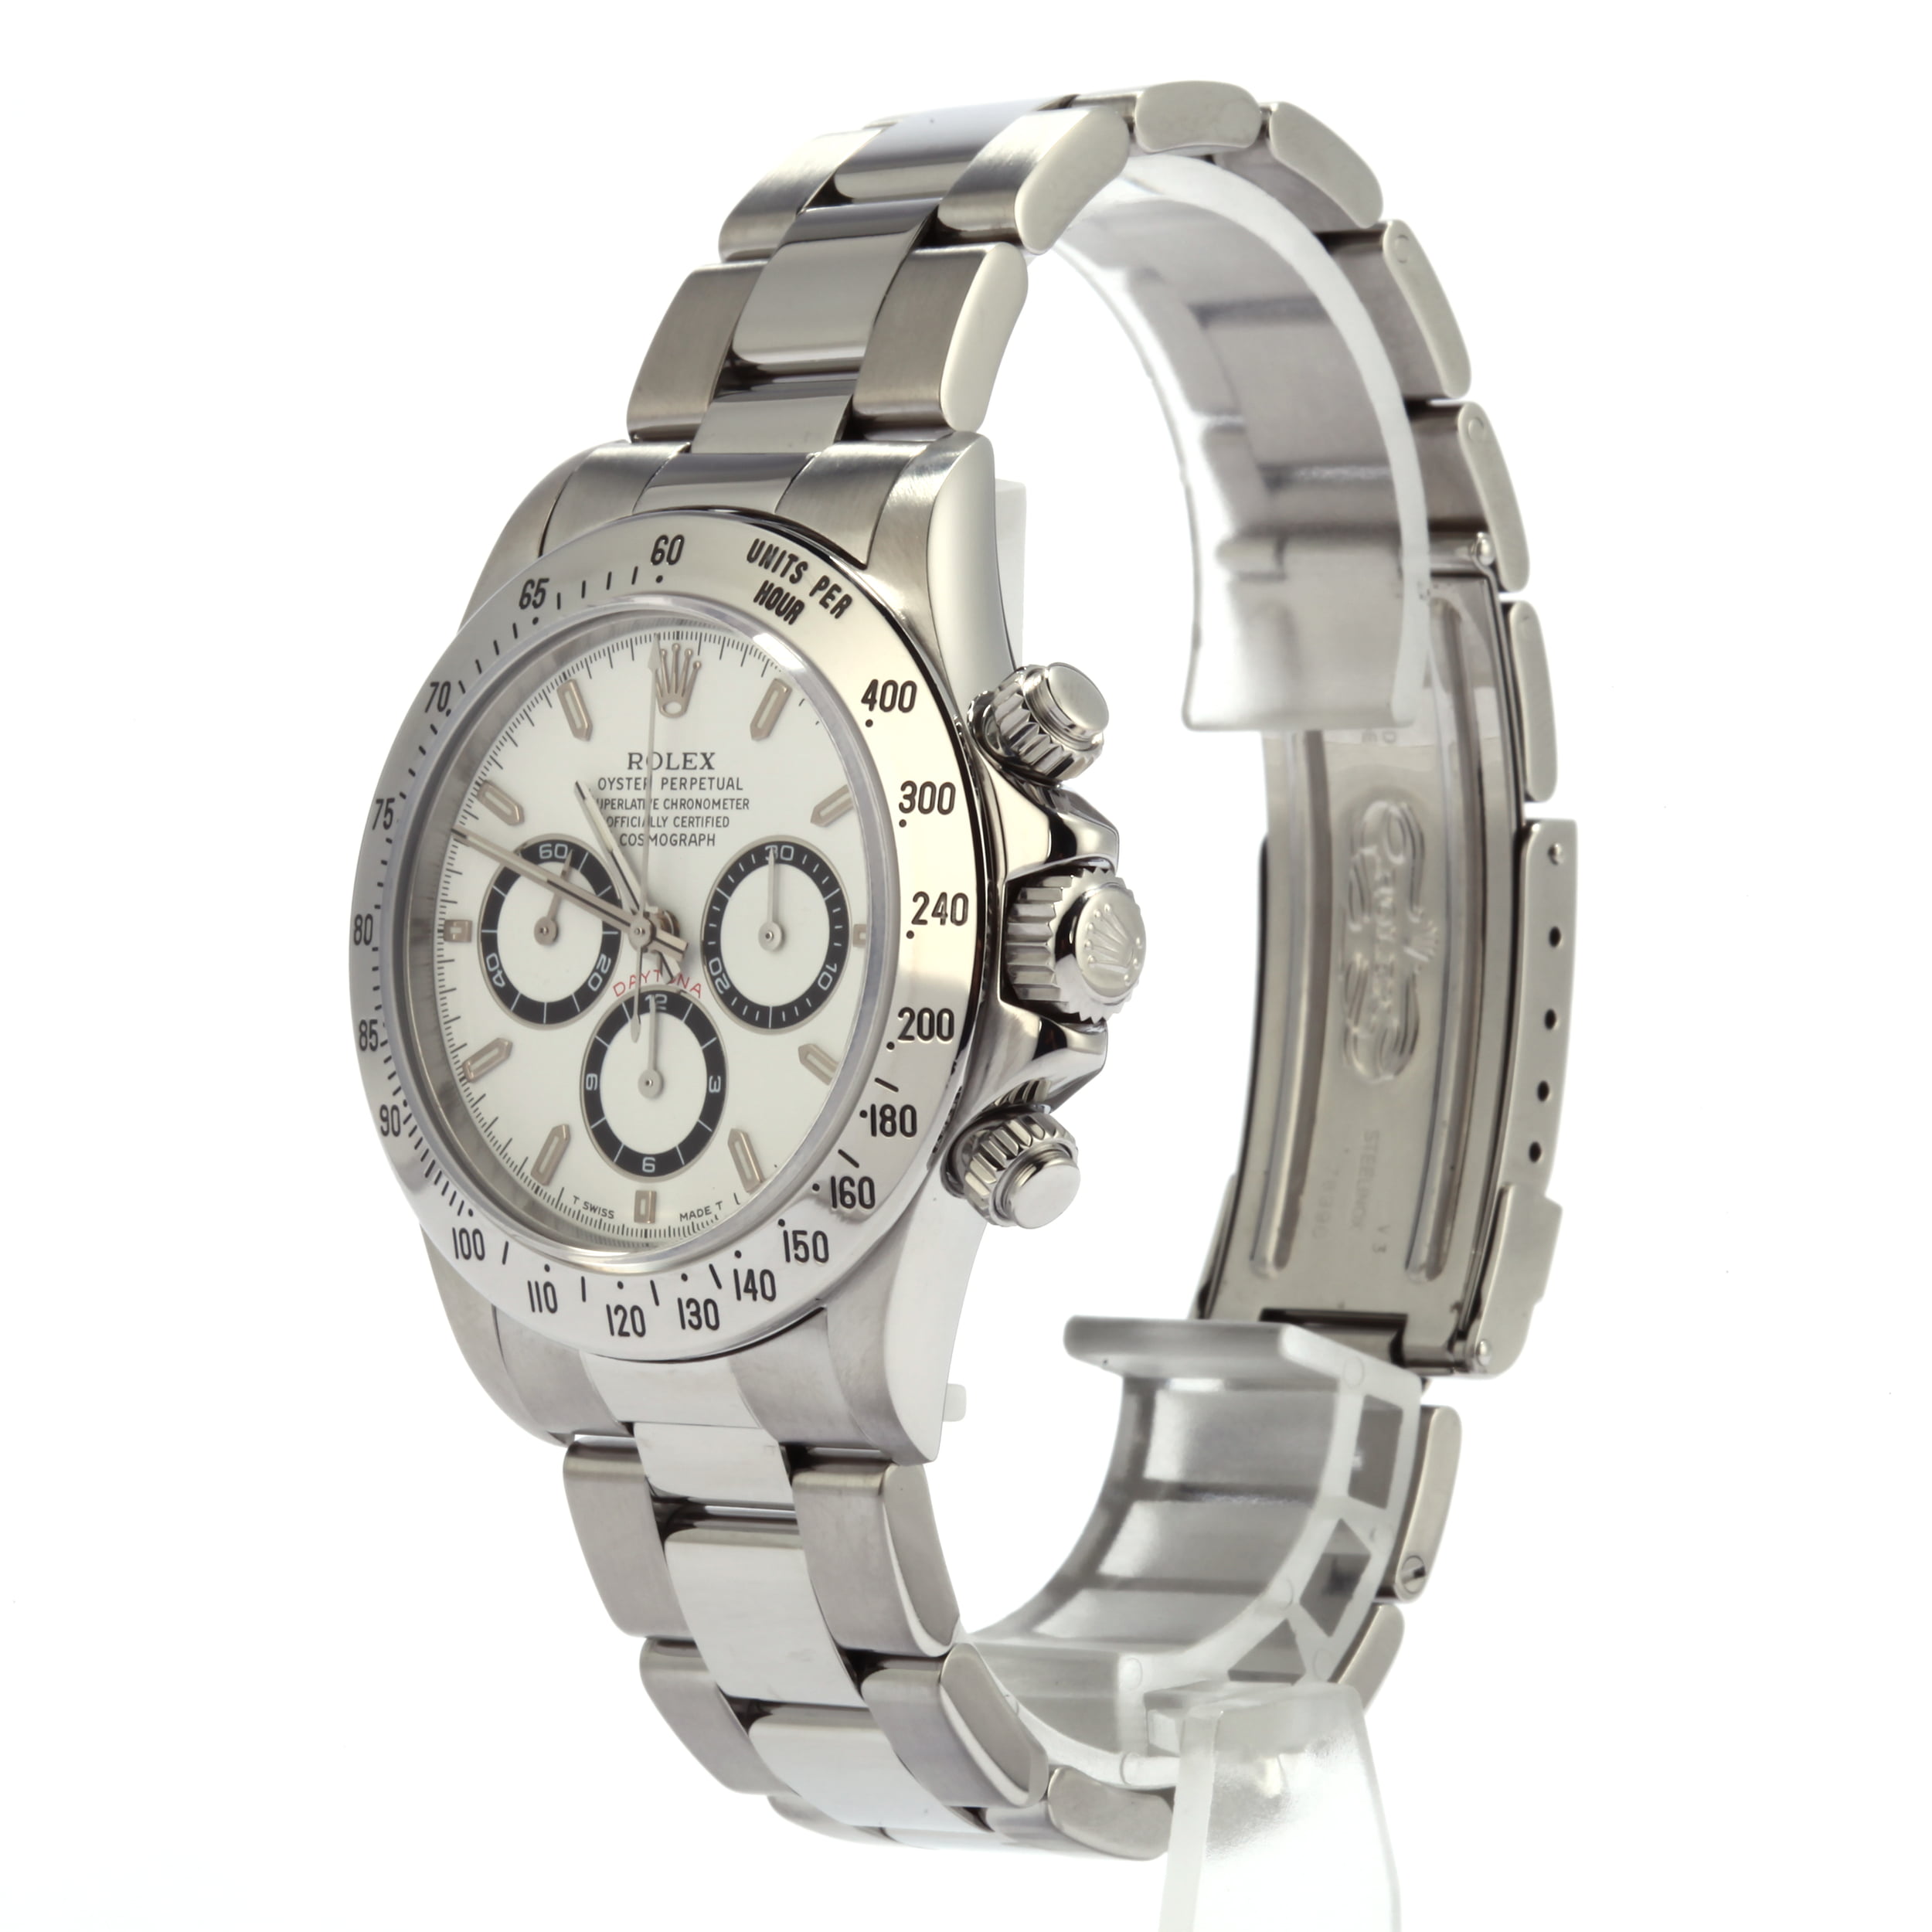 Buy Used Rolex Daytona 16520 | Bob's Watches - Sku: 126239